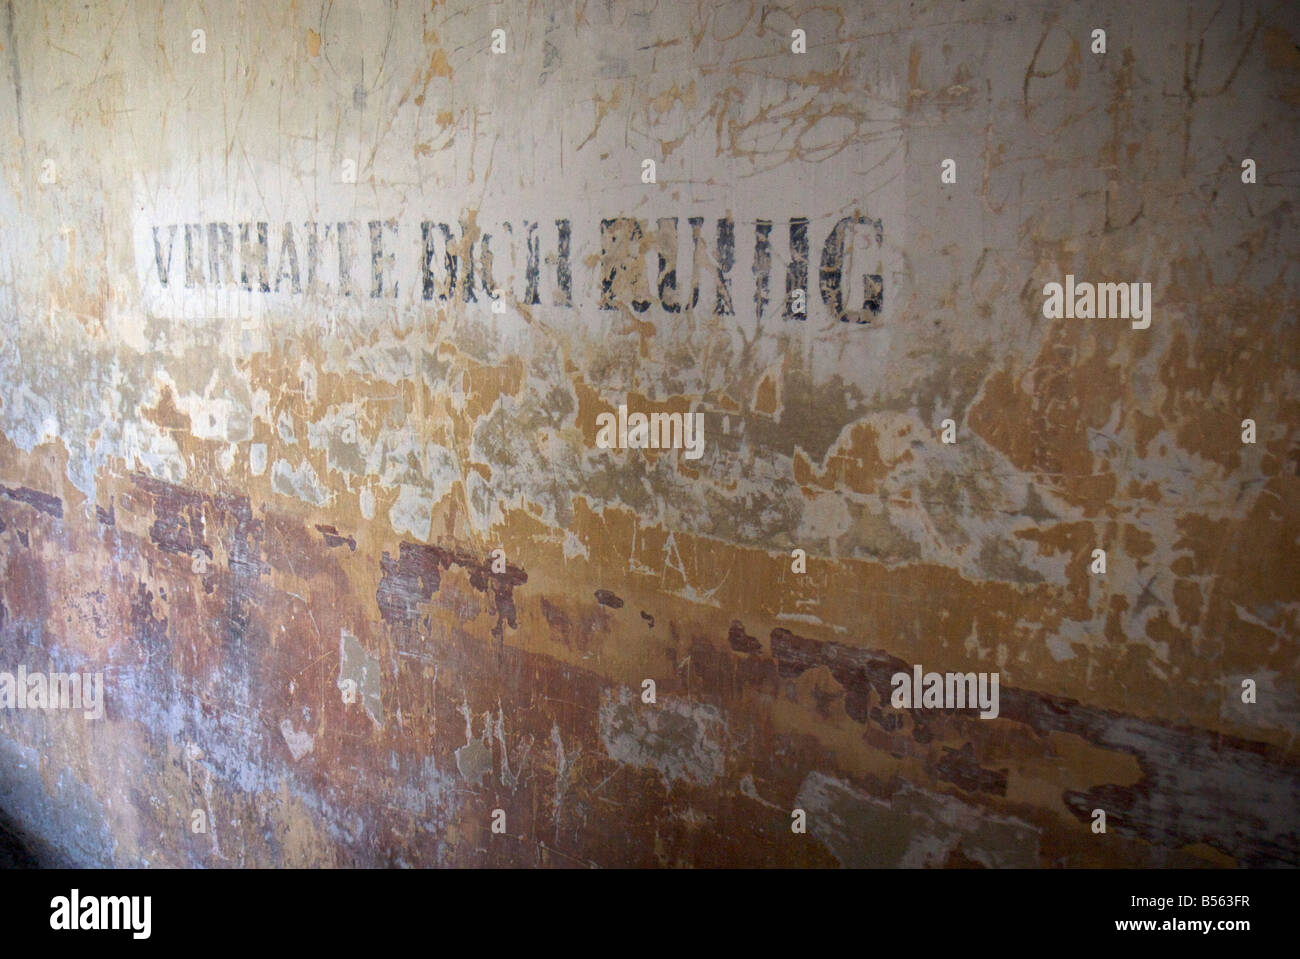 Inscription 'Verhalte dich ruhig' on a wall in former concentration camp Auschwitz II (Birkenau) Stock Photo